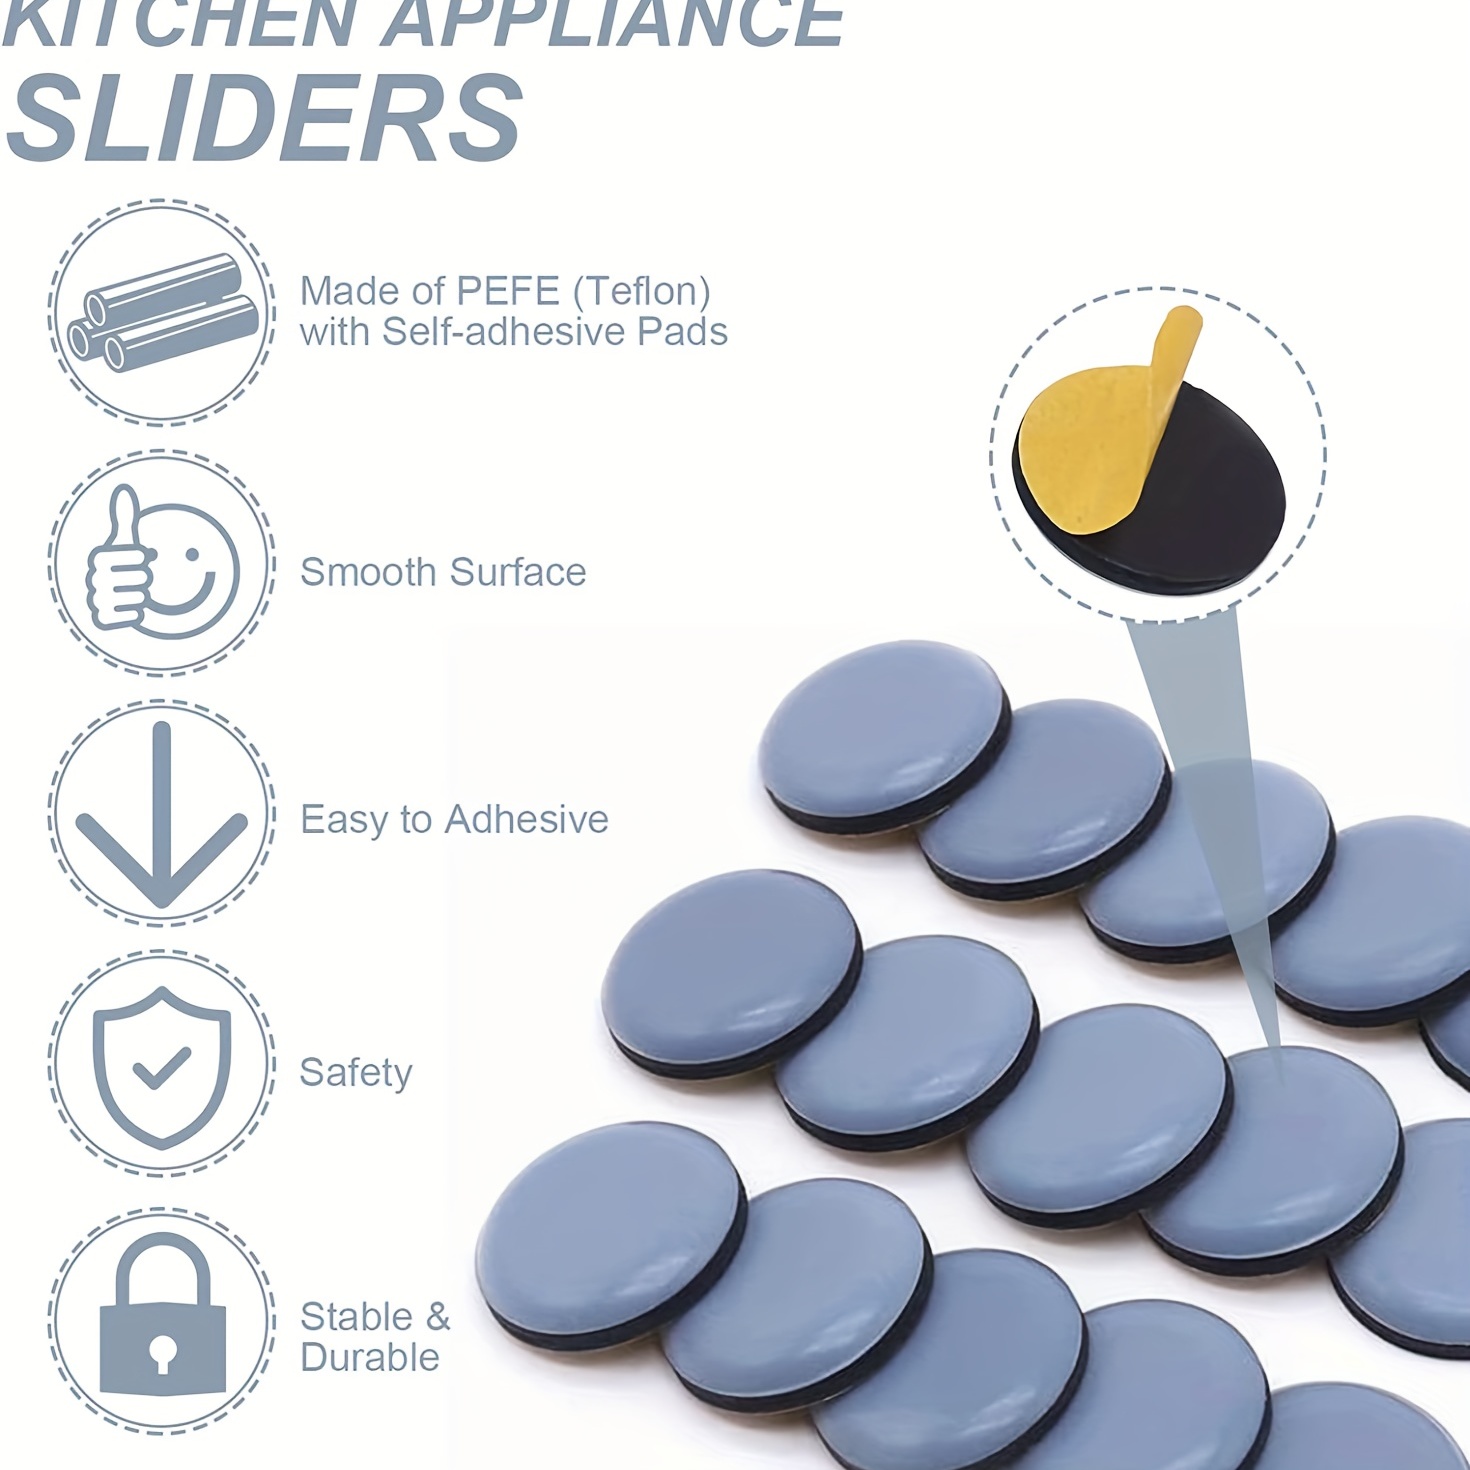  Appliance Slider - 20PCS DIY Adhesive Teflon Self